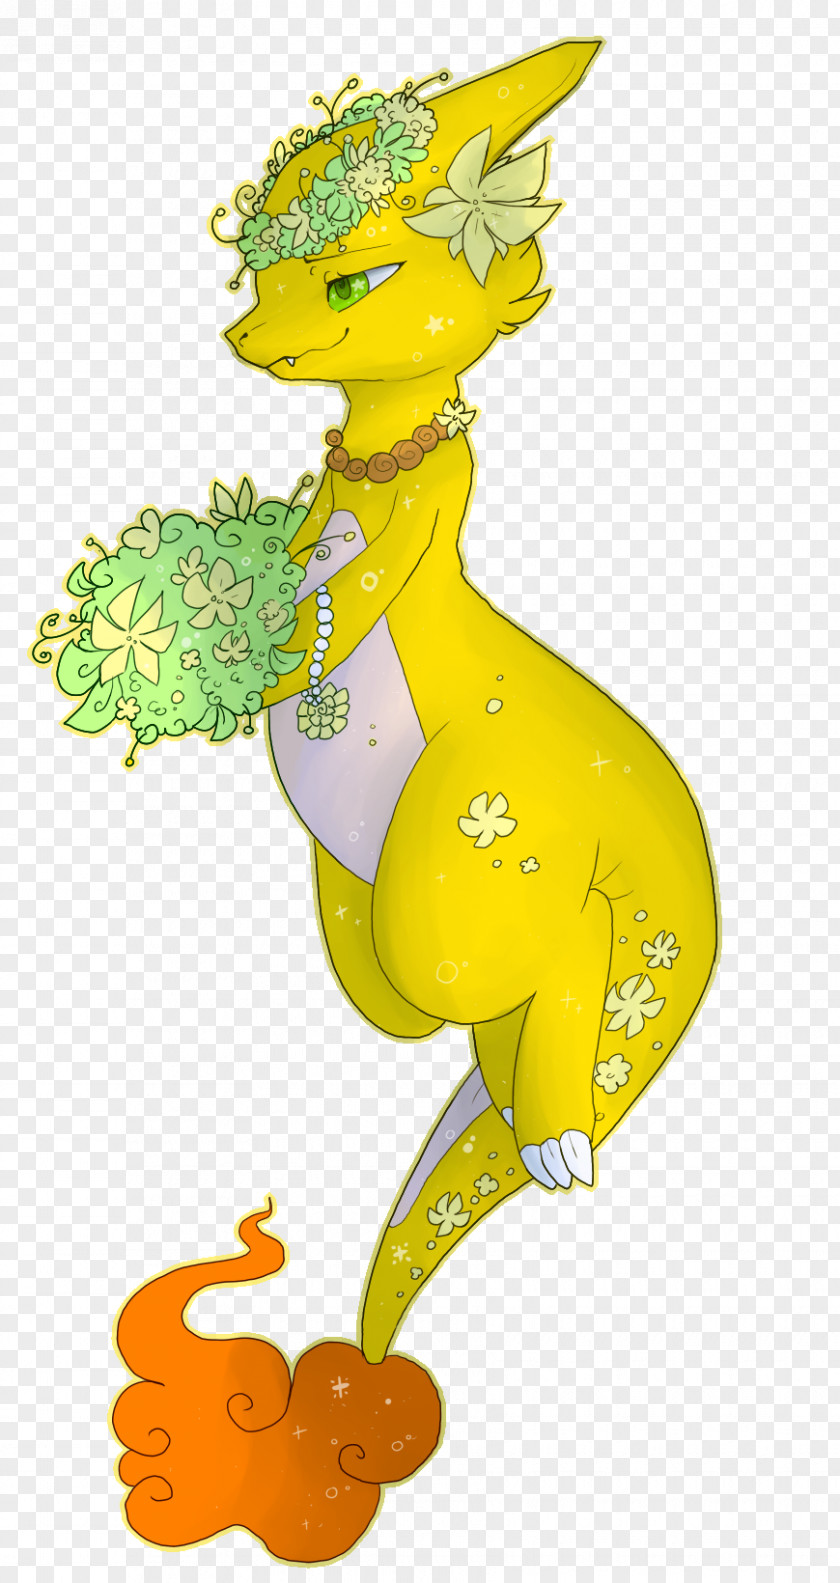 Giraffe Animated Cartoon Legendary Creature PNG